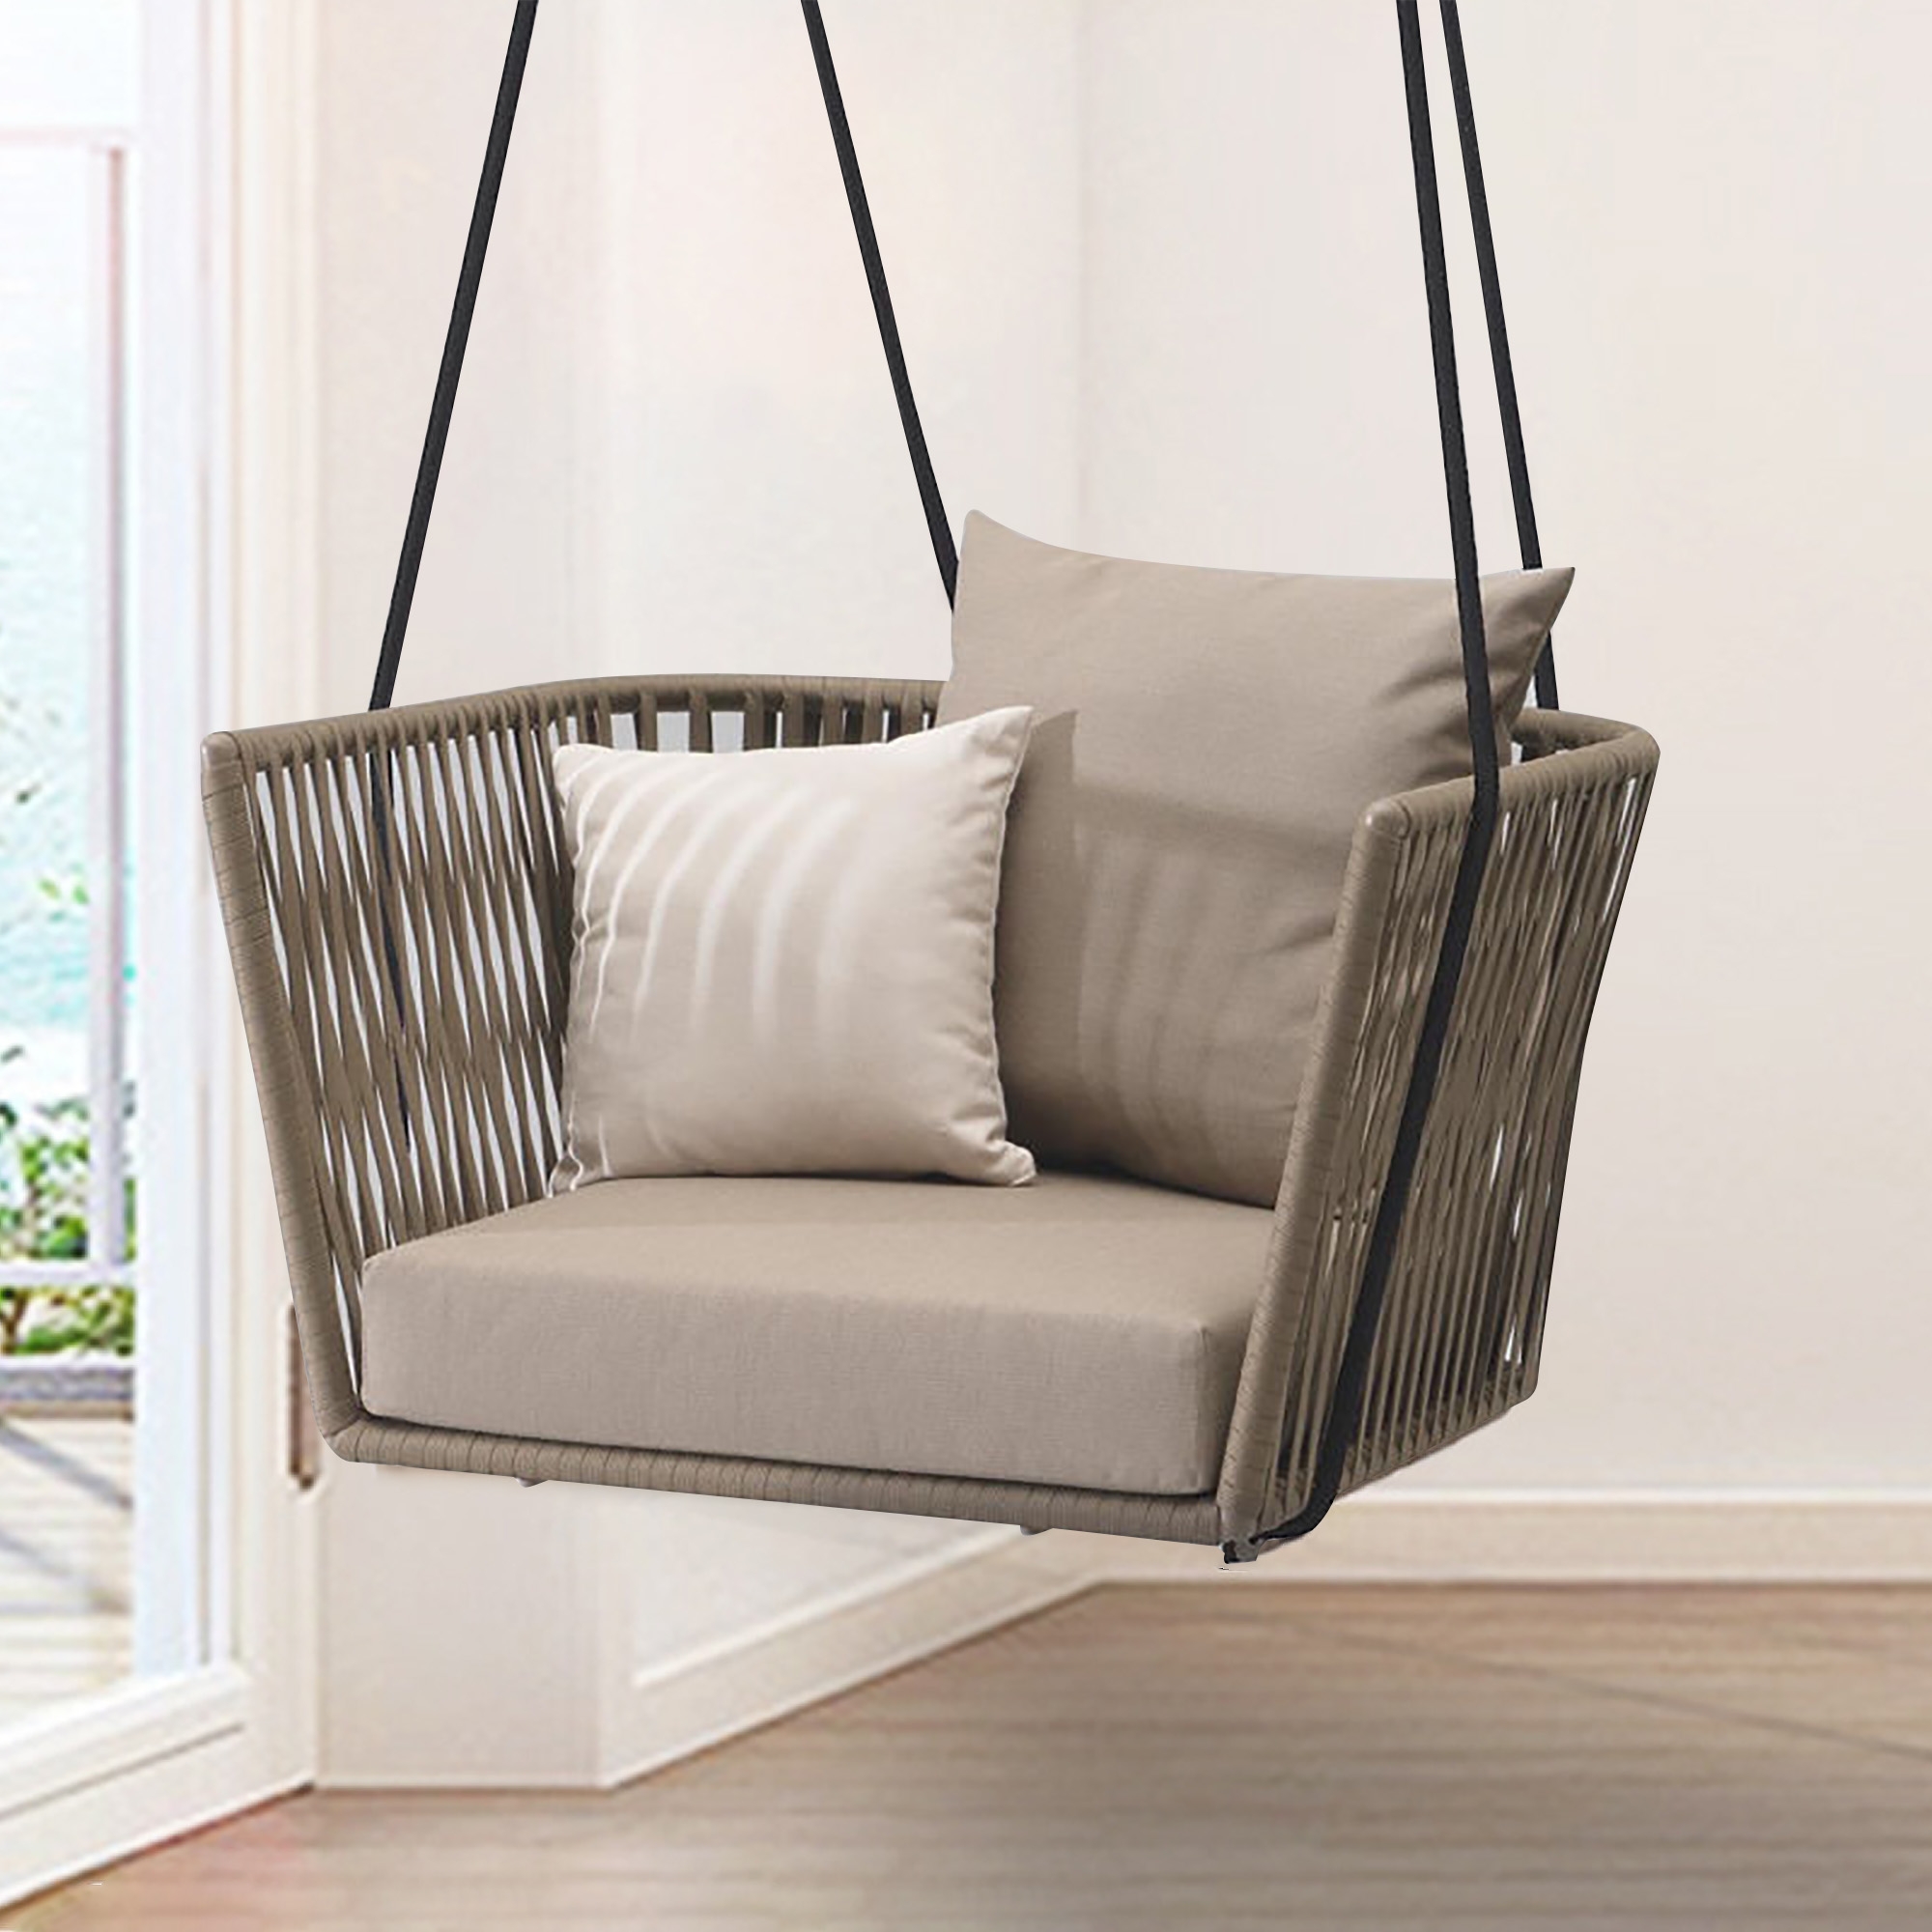 Rattan Porch Swing Chair Hanging Chair with Khaki Cushion Pillow